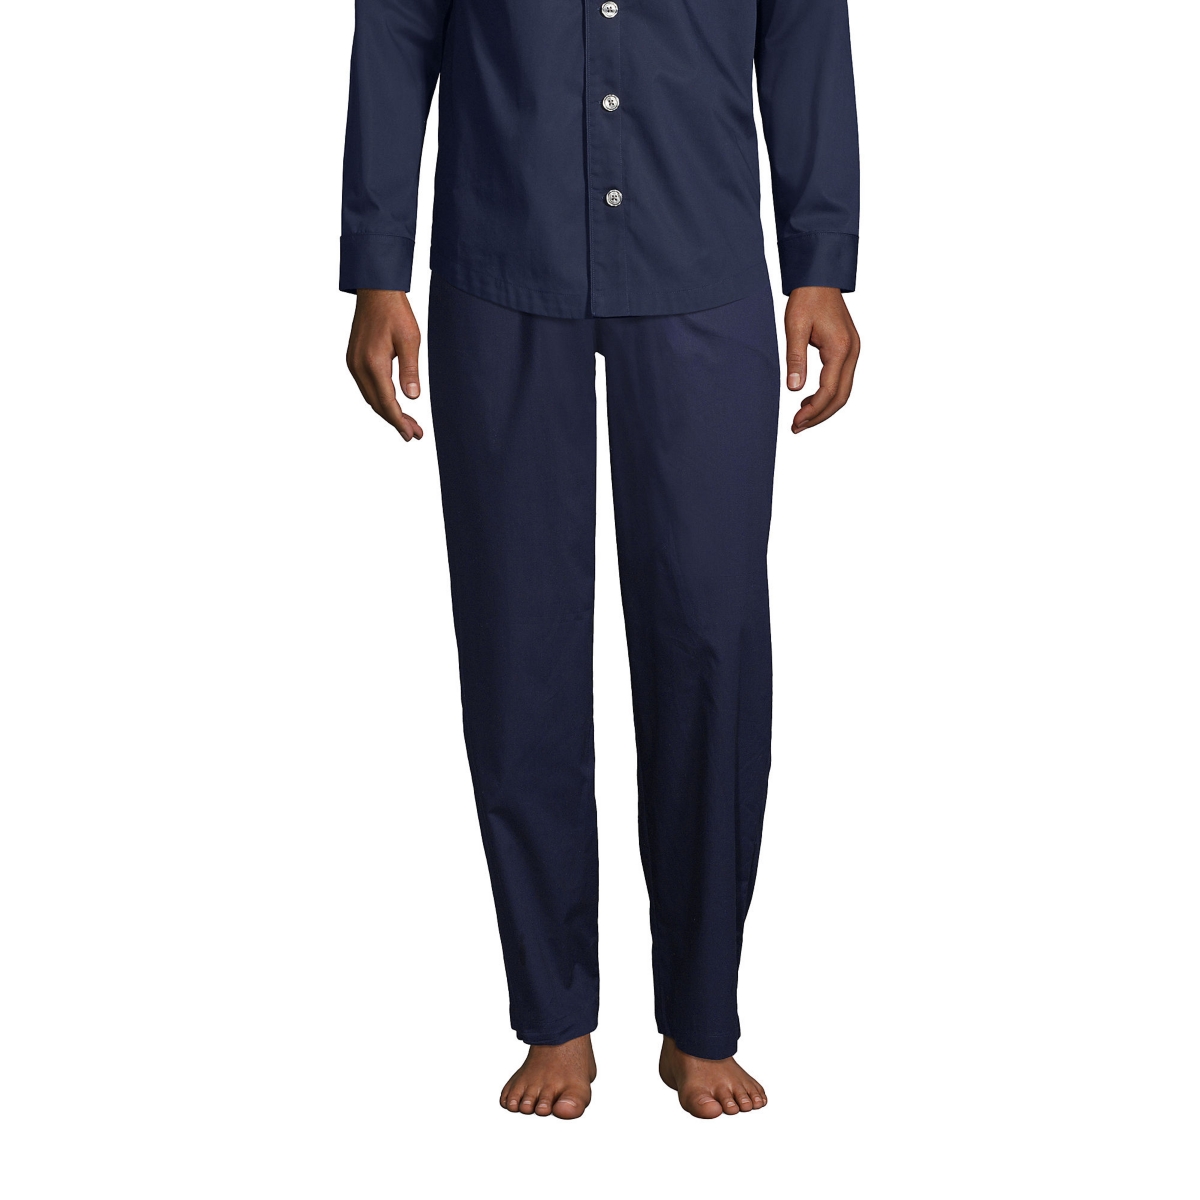 Men's Tall Poplin Pajama Pants - Radiant navy